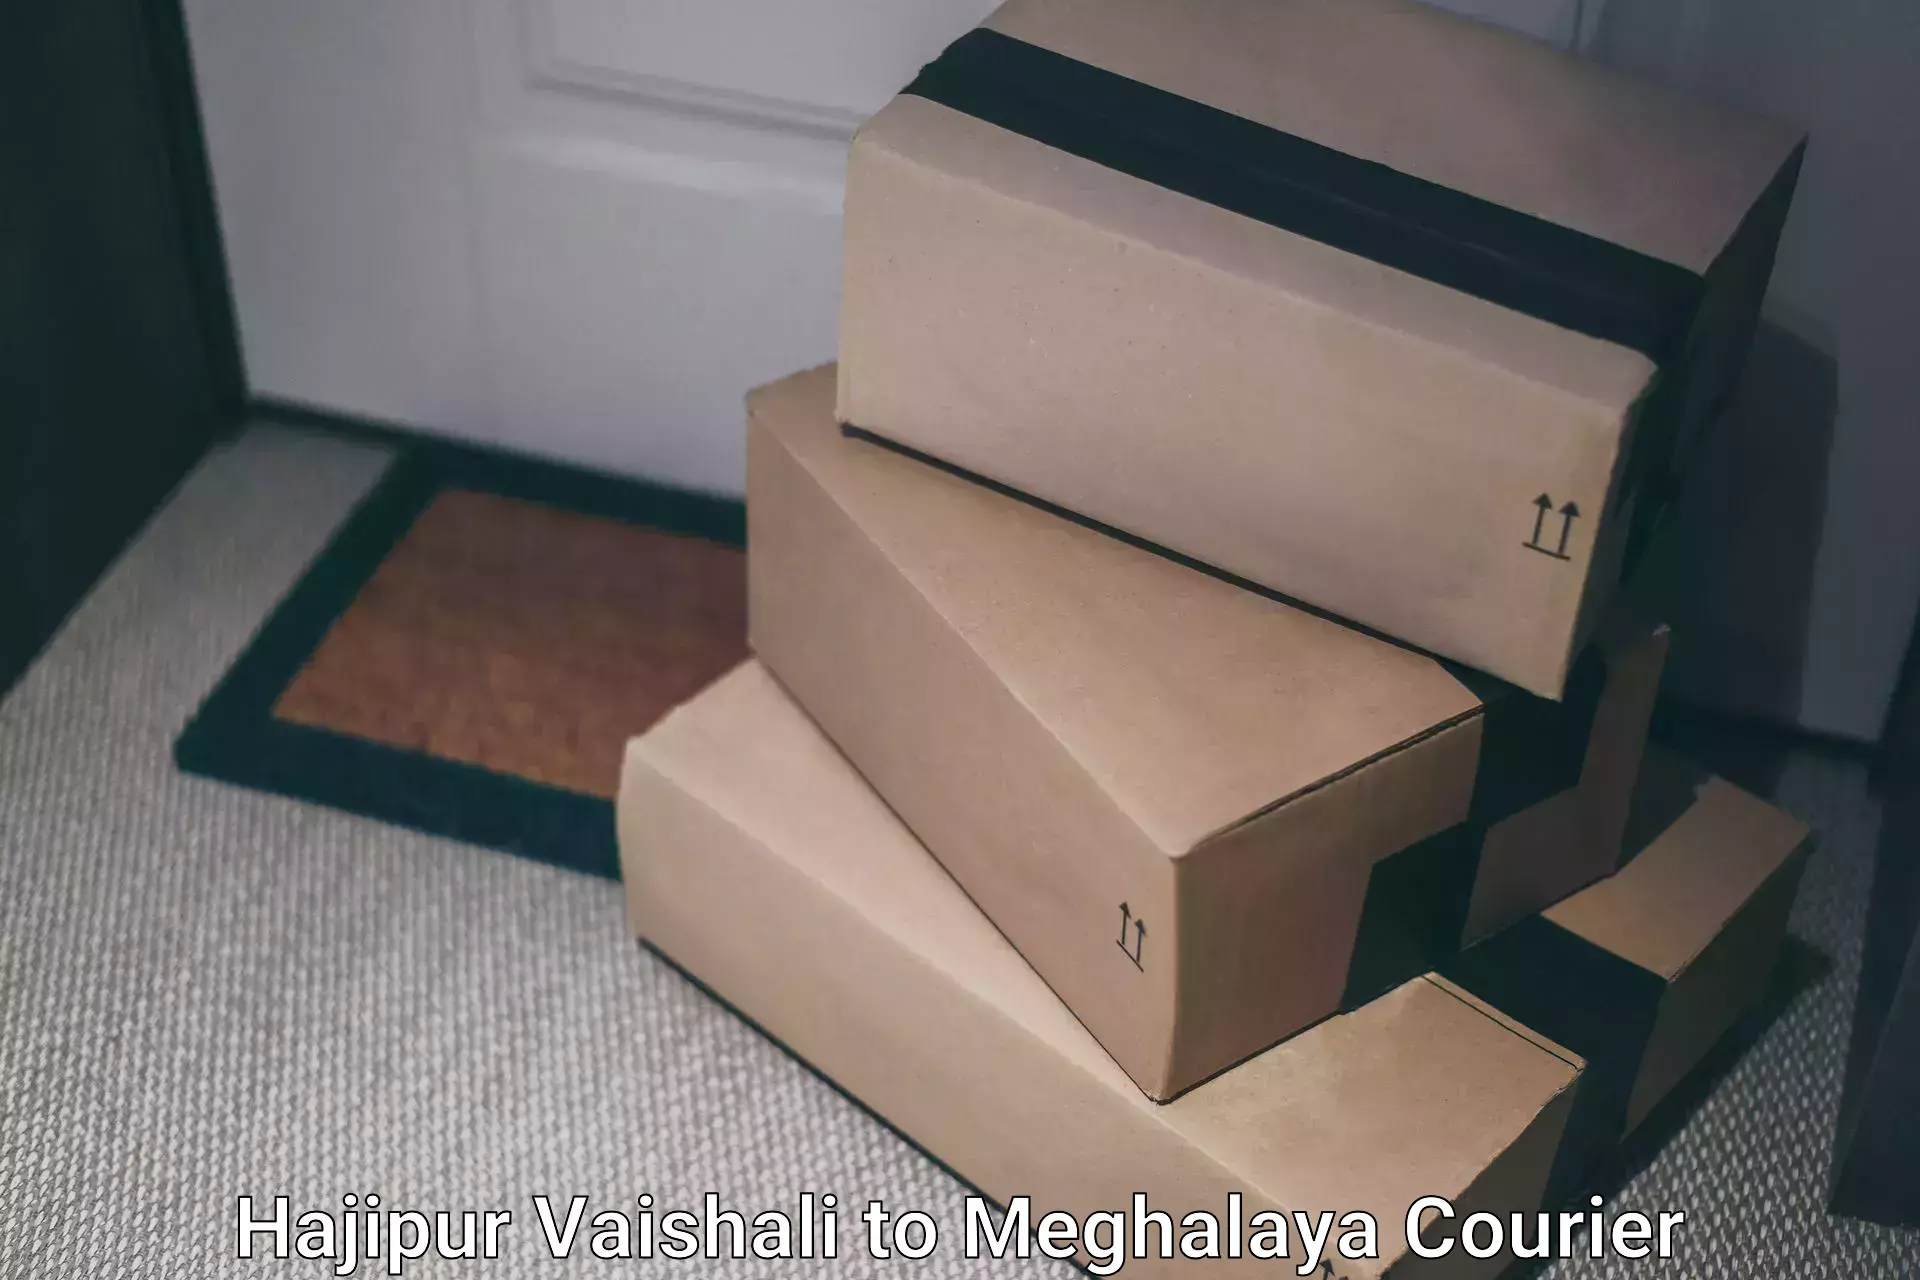 Express delivery capabilities Hajipur Vaishali to Meghalaya